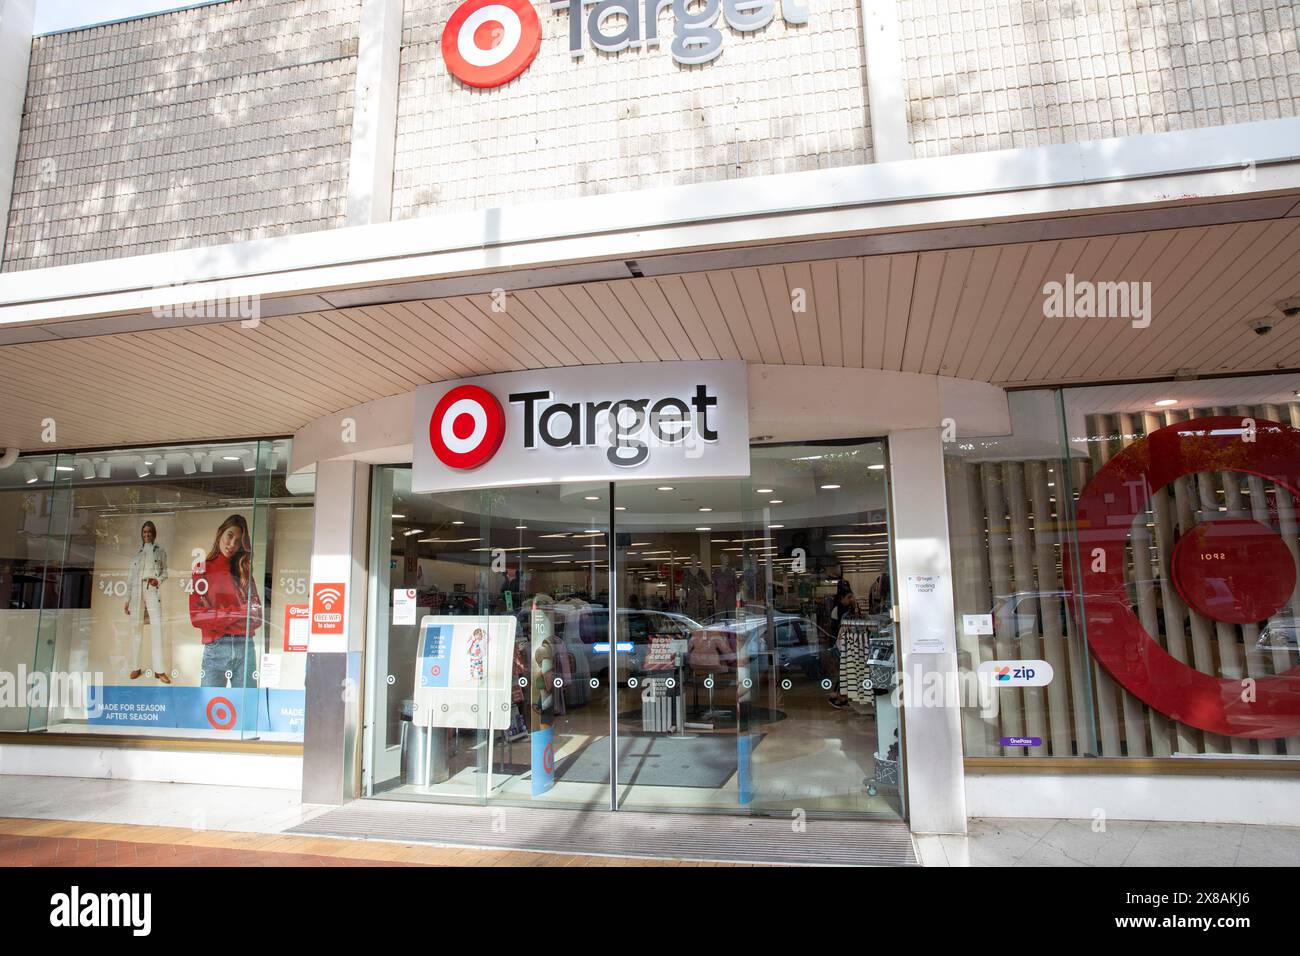 Tamworth city centre, Target retail department store on peel street,NSW,Australia Stock Photo